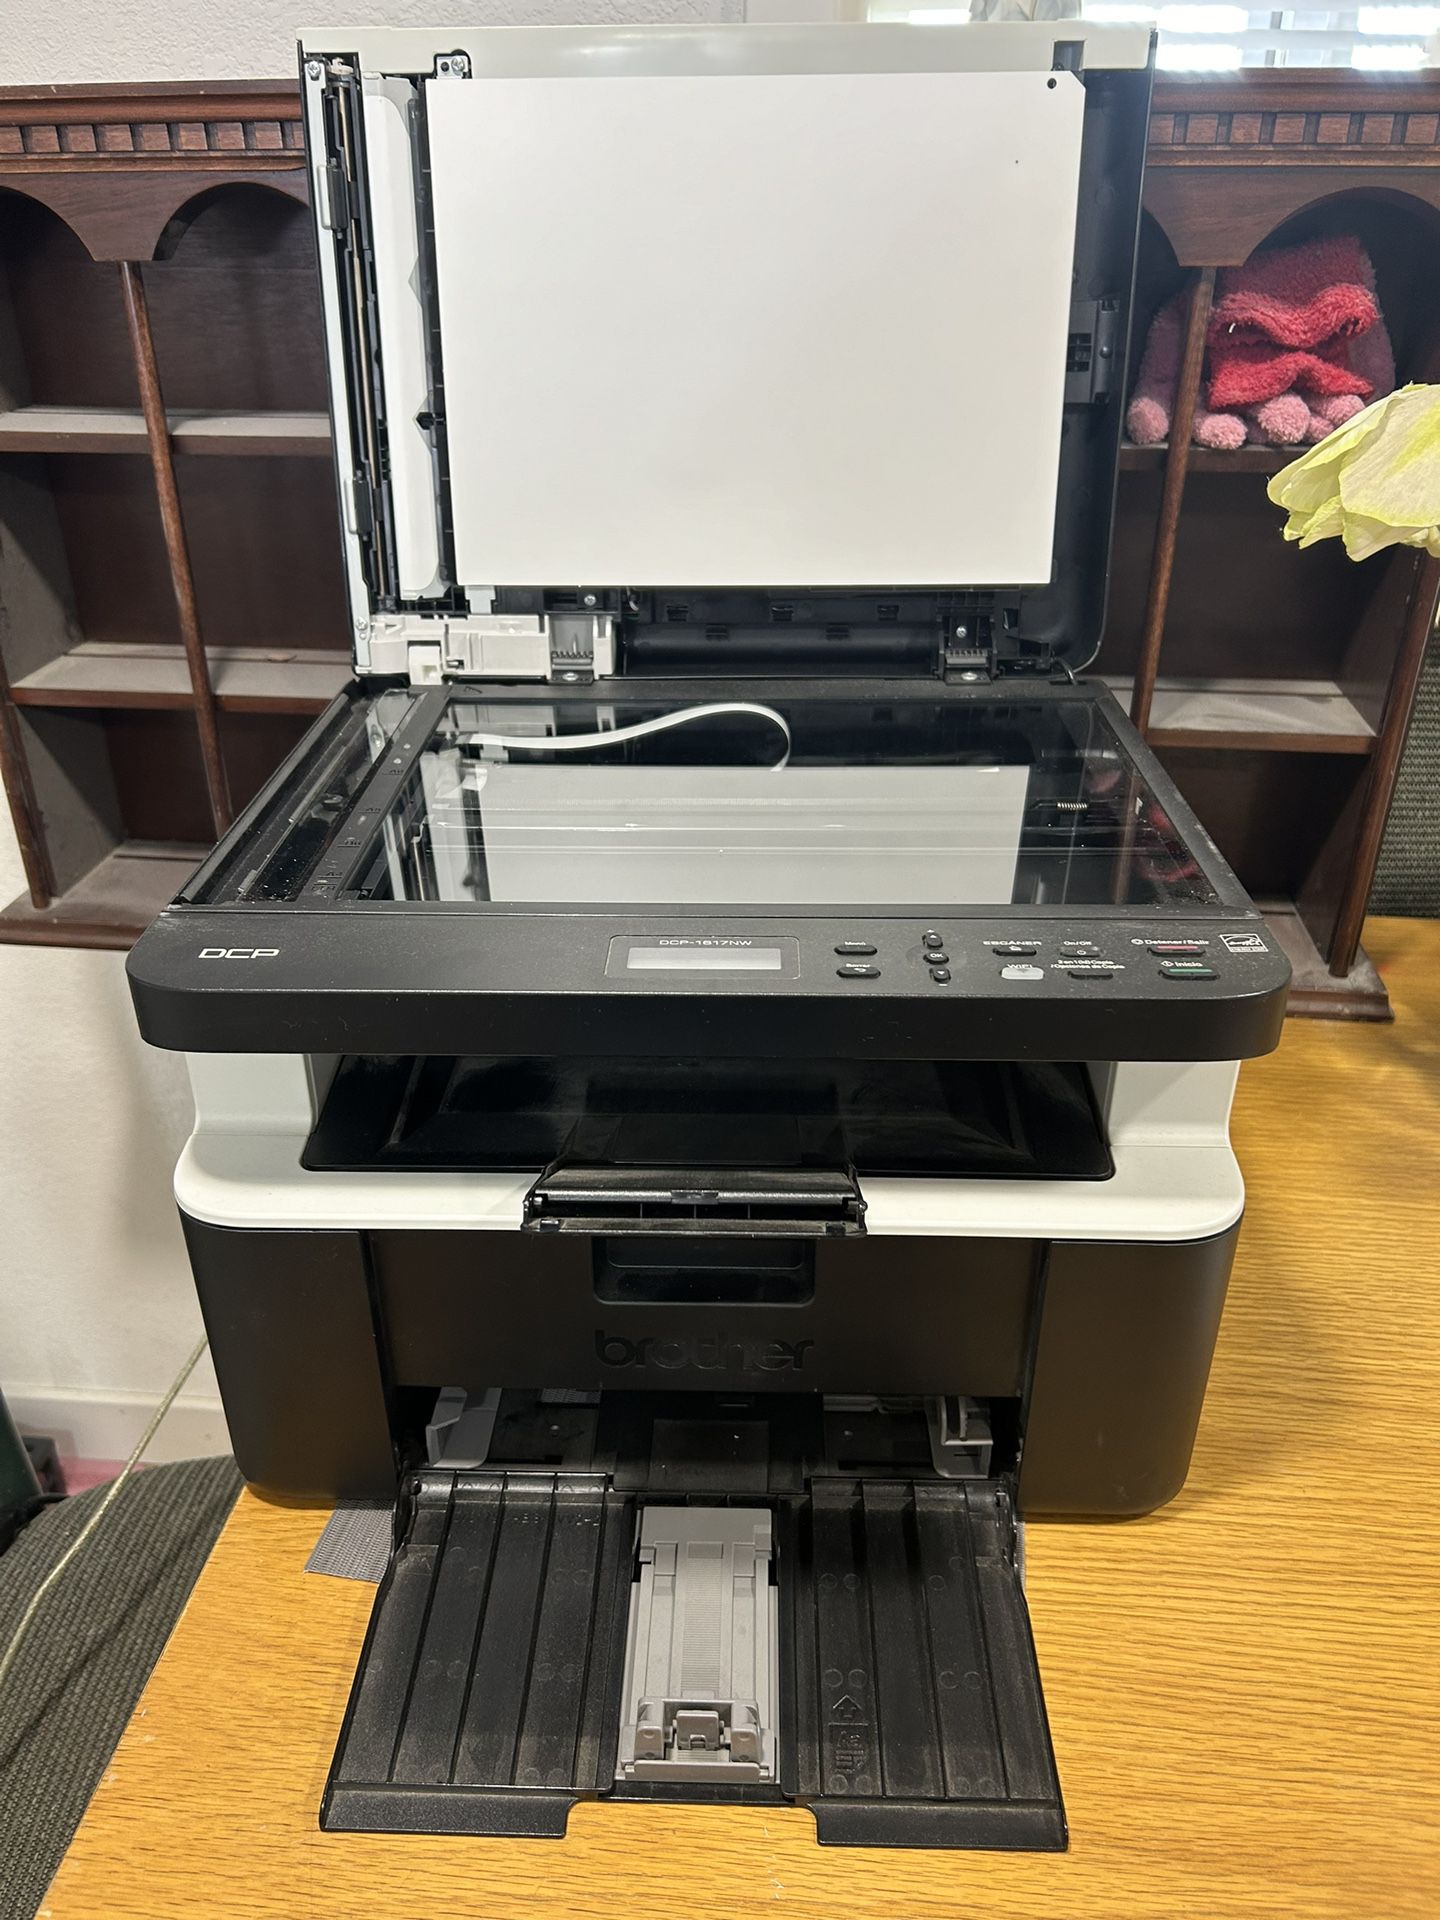 Printer/lazer/scaner